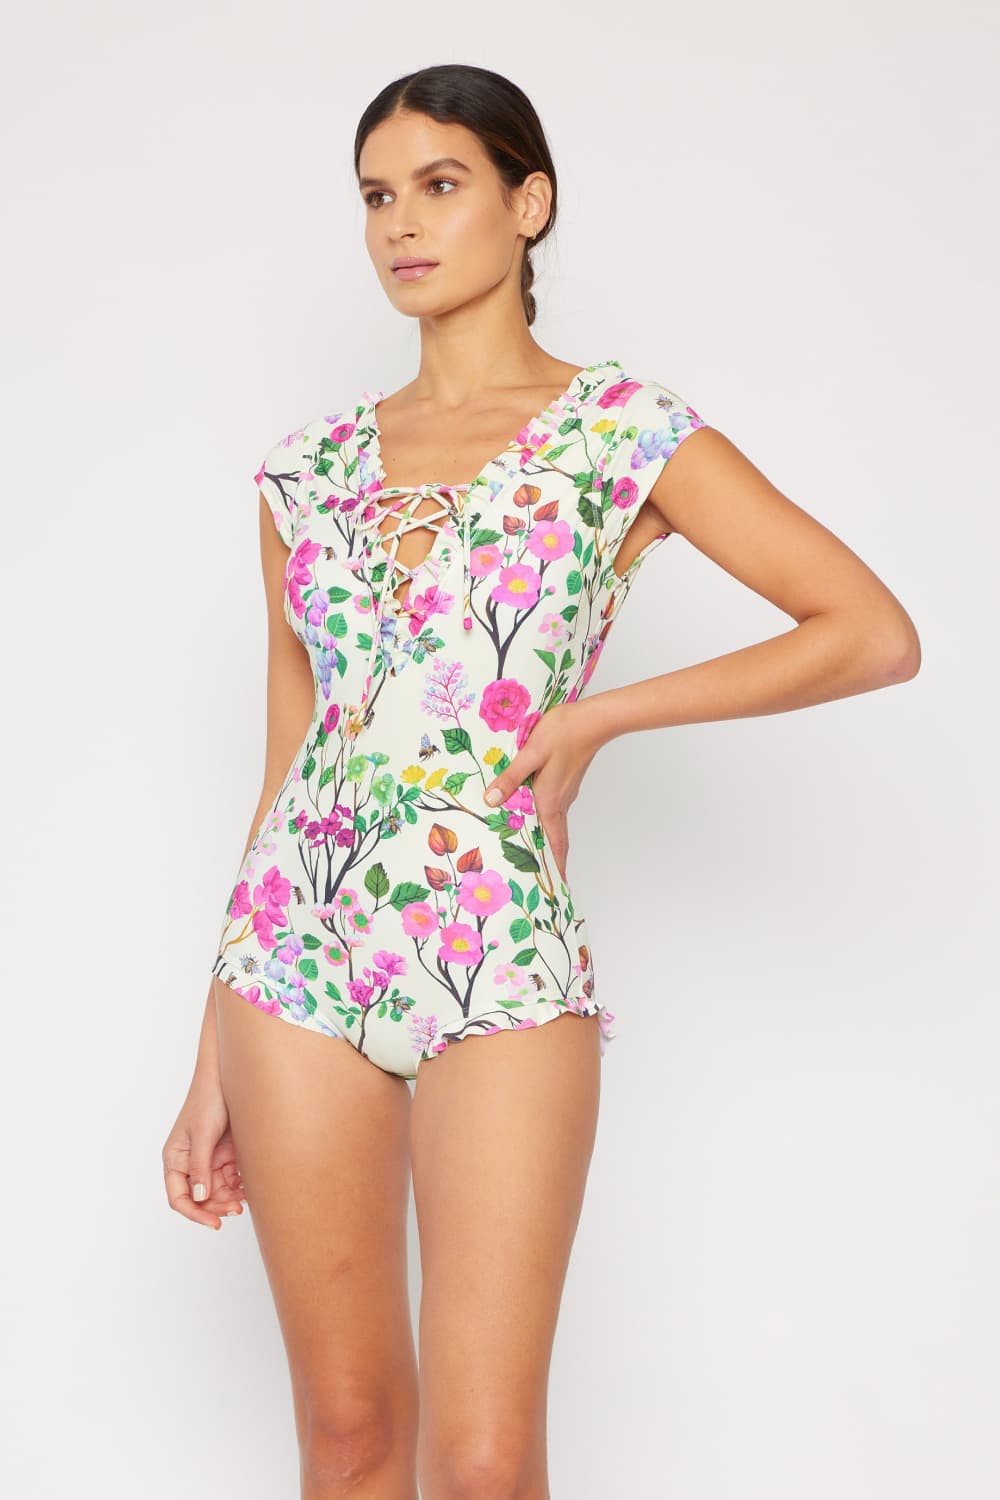 Marina West Swim Bring Me Flowers V-Neck One Piece Swimsuit Cherry Blossom Cream